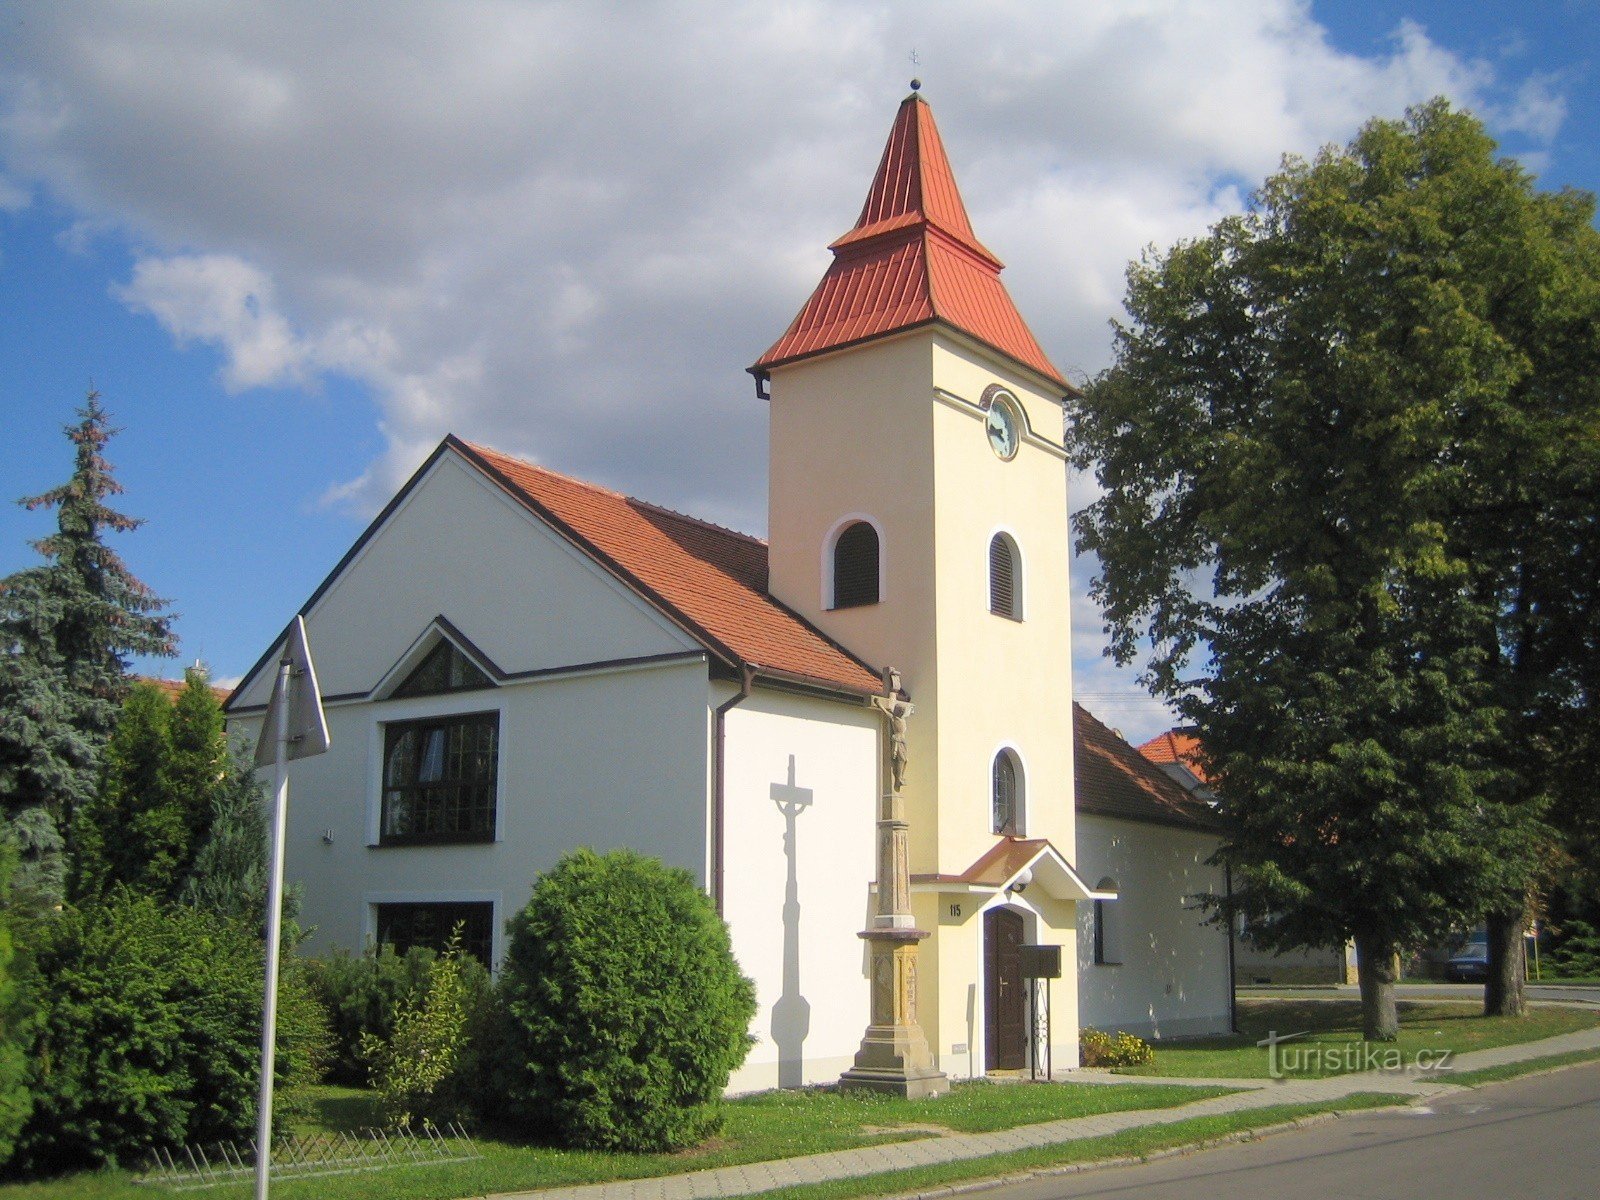 Knežpole - nhà thờ St. Anne